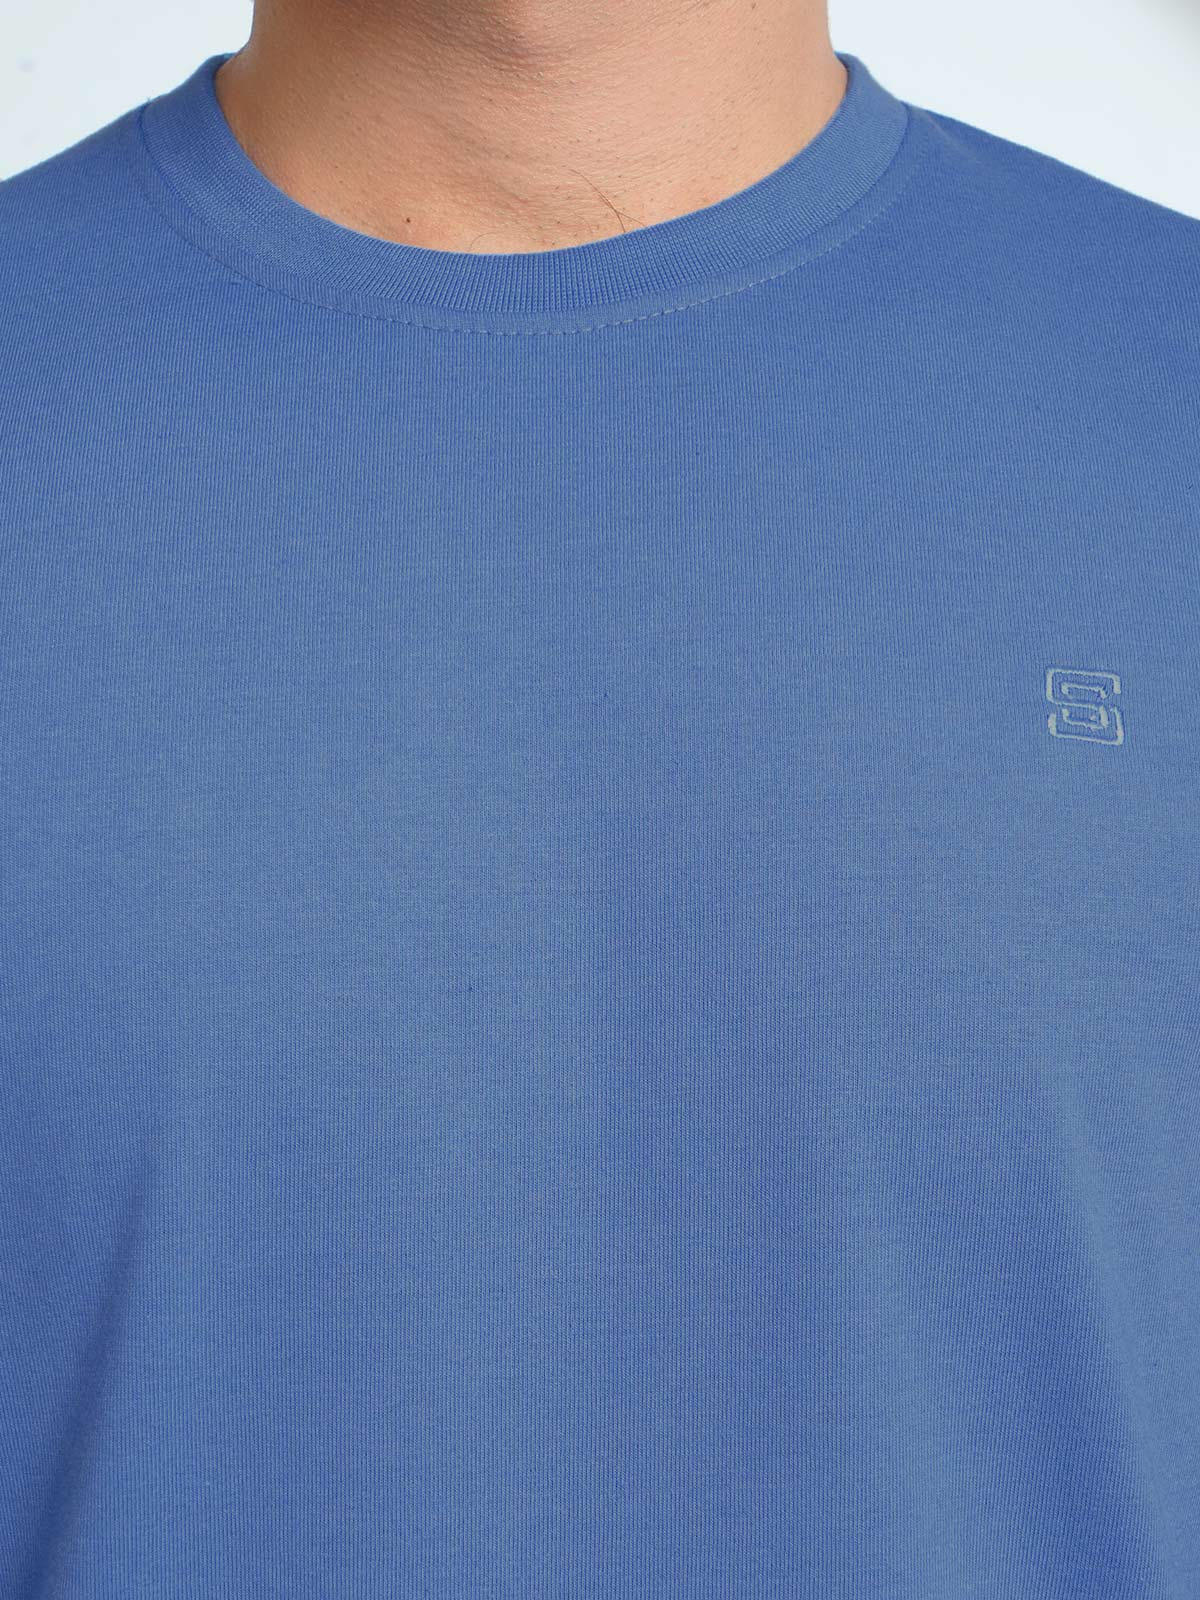 Royal Blue Plain Half Sleeves Men’s Round Neck T-Shirt (TEE-126)